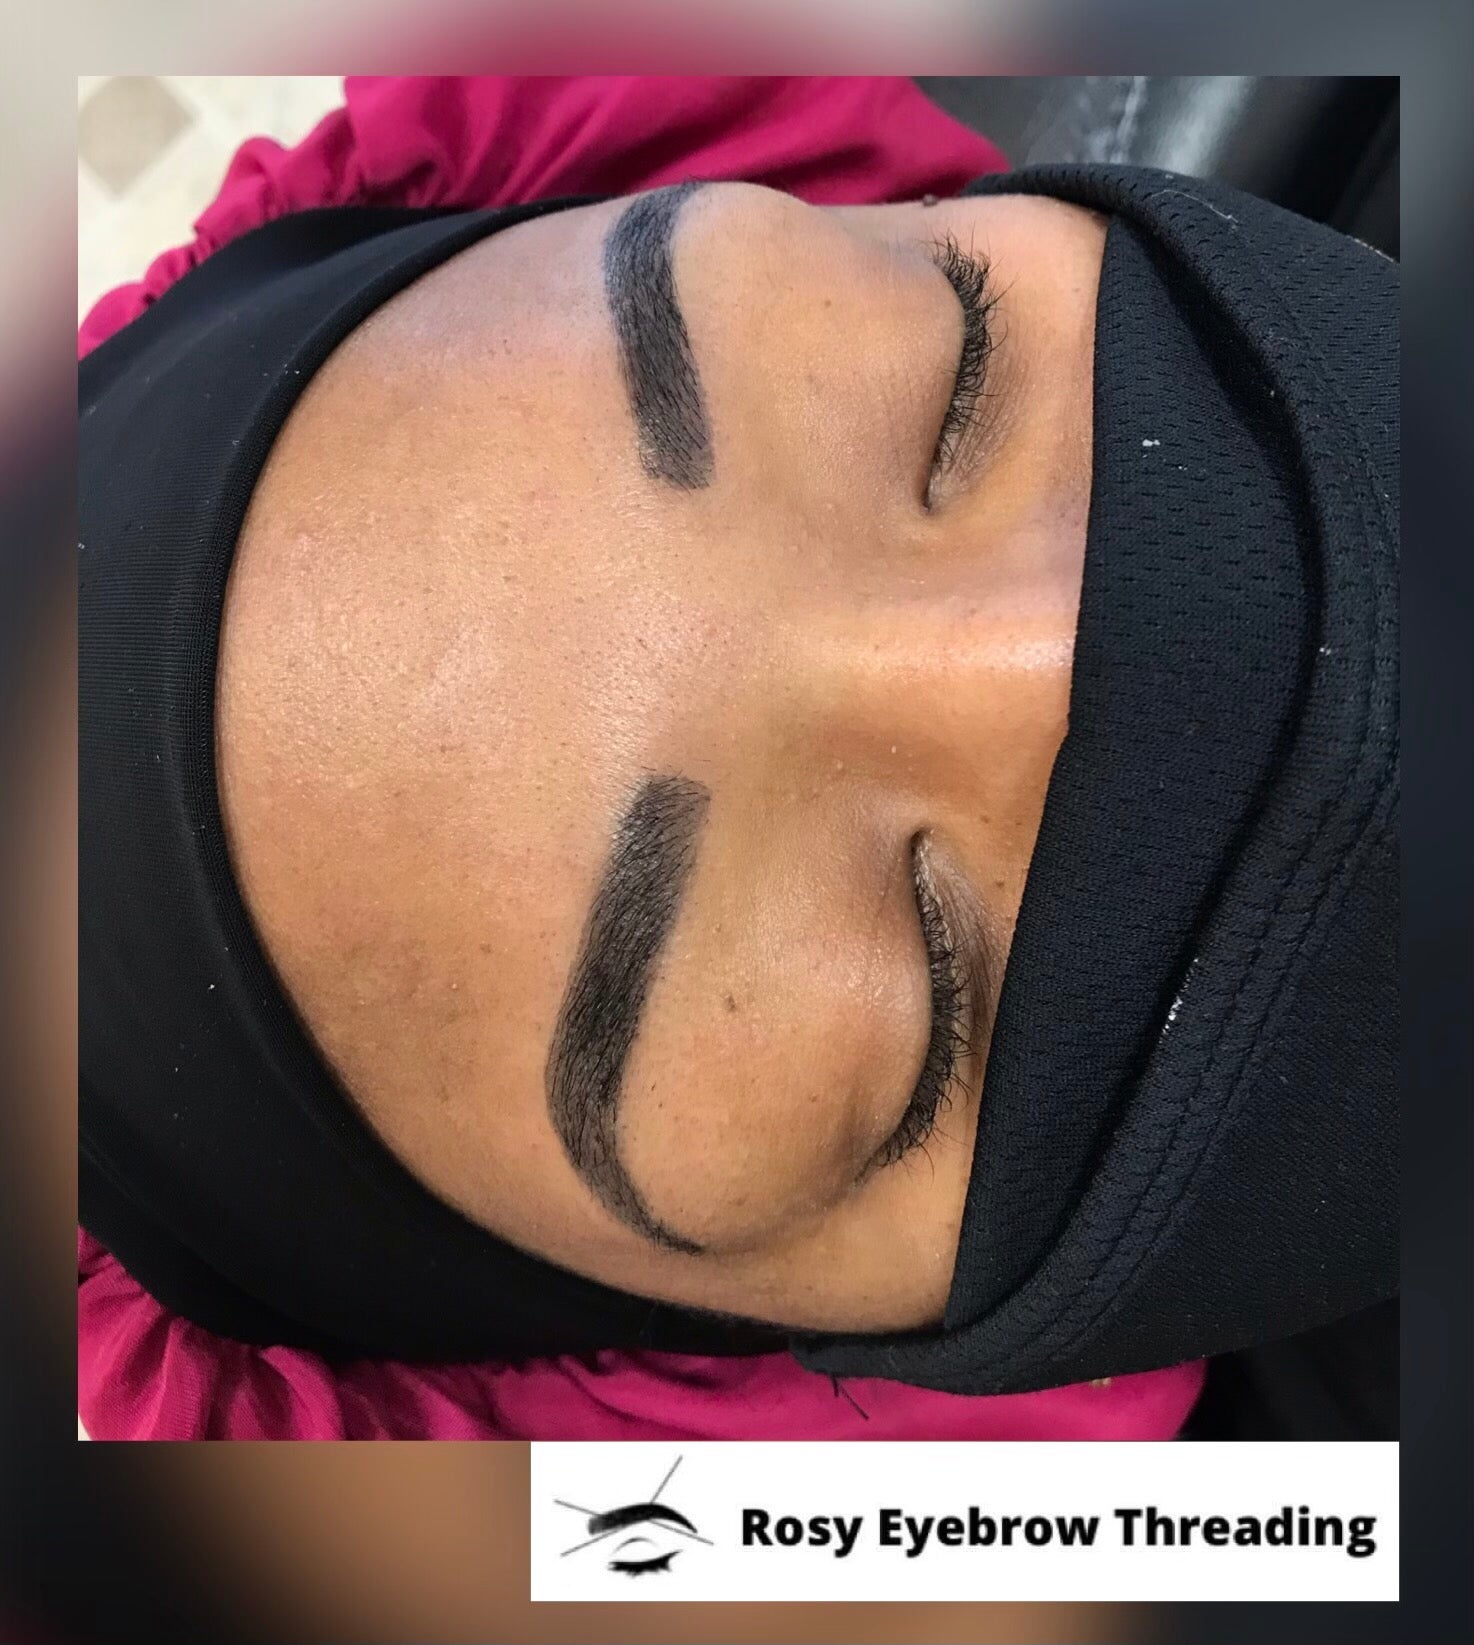 rosy eyebrow threading | Best eyebrow threading in Las Vegas